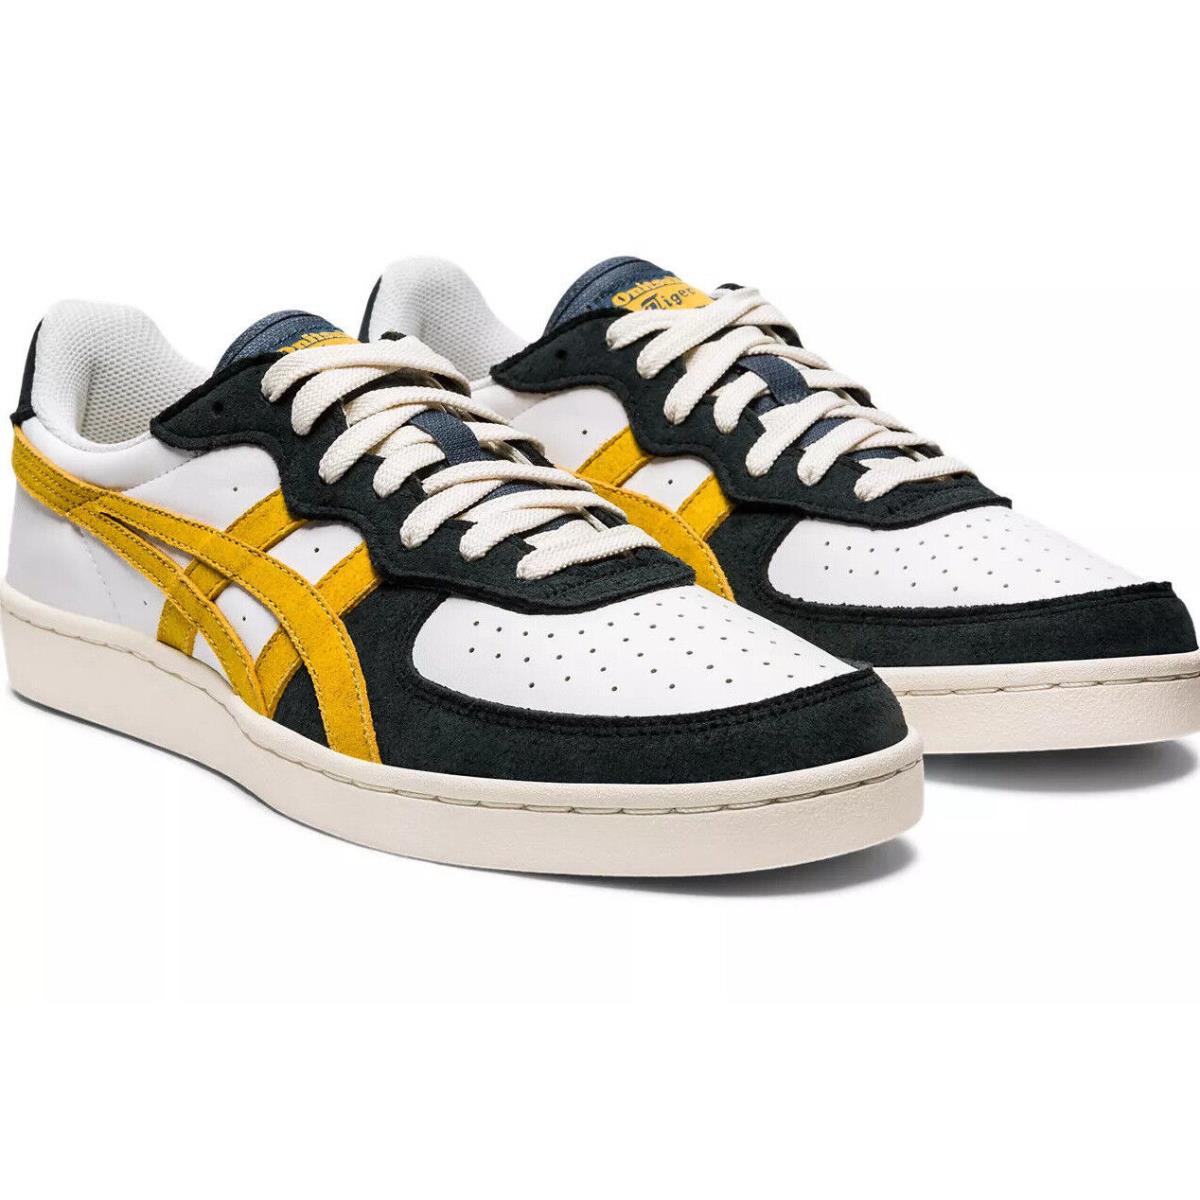 11.5 Asics Onitsuka Tiger Gsm White/tiger Yellow Sneakers 1183A702.100 SZ 11.5 - White/Tiger Yellow